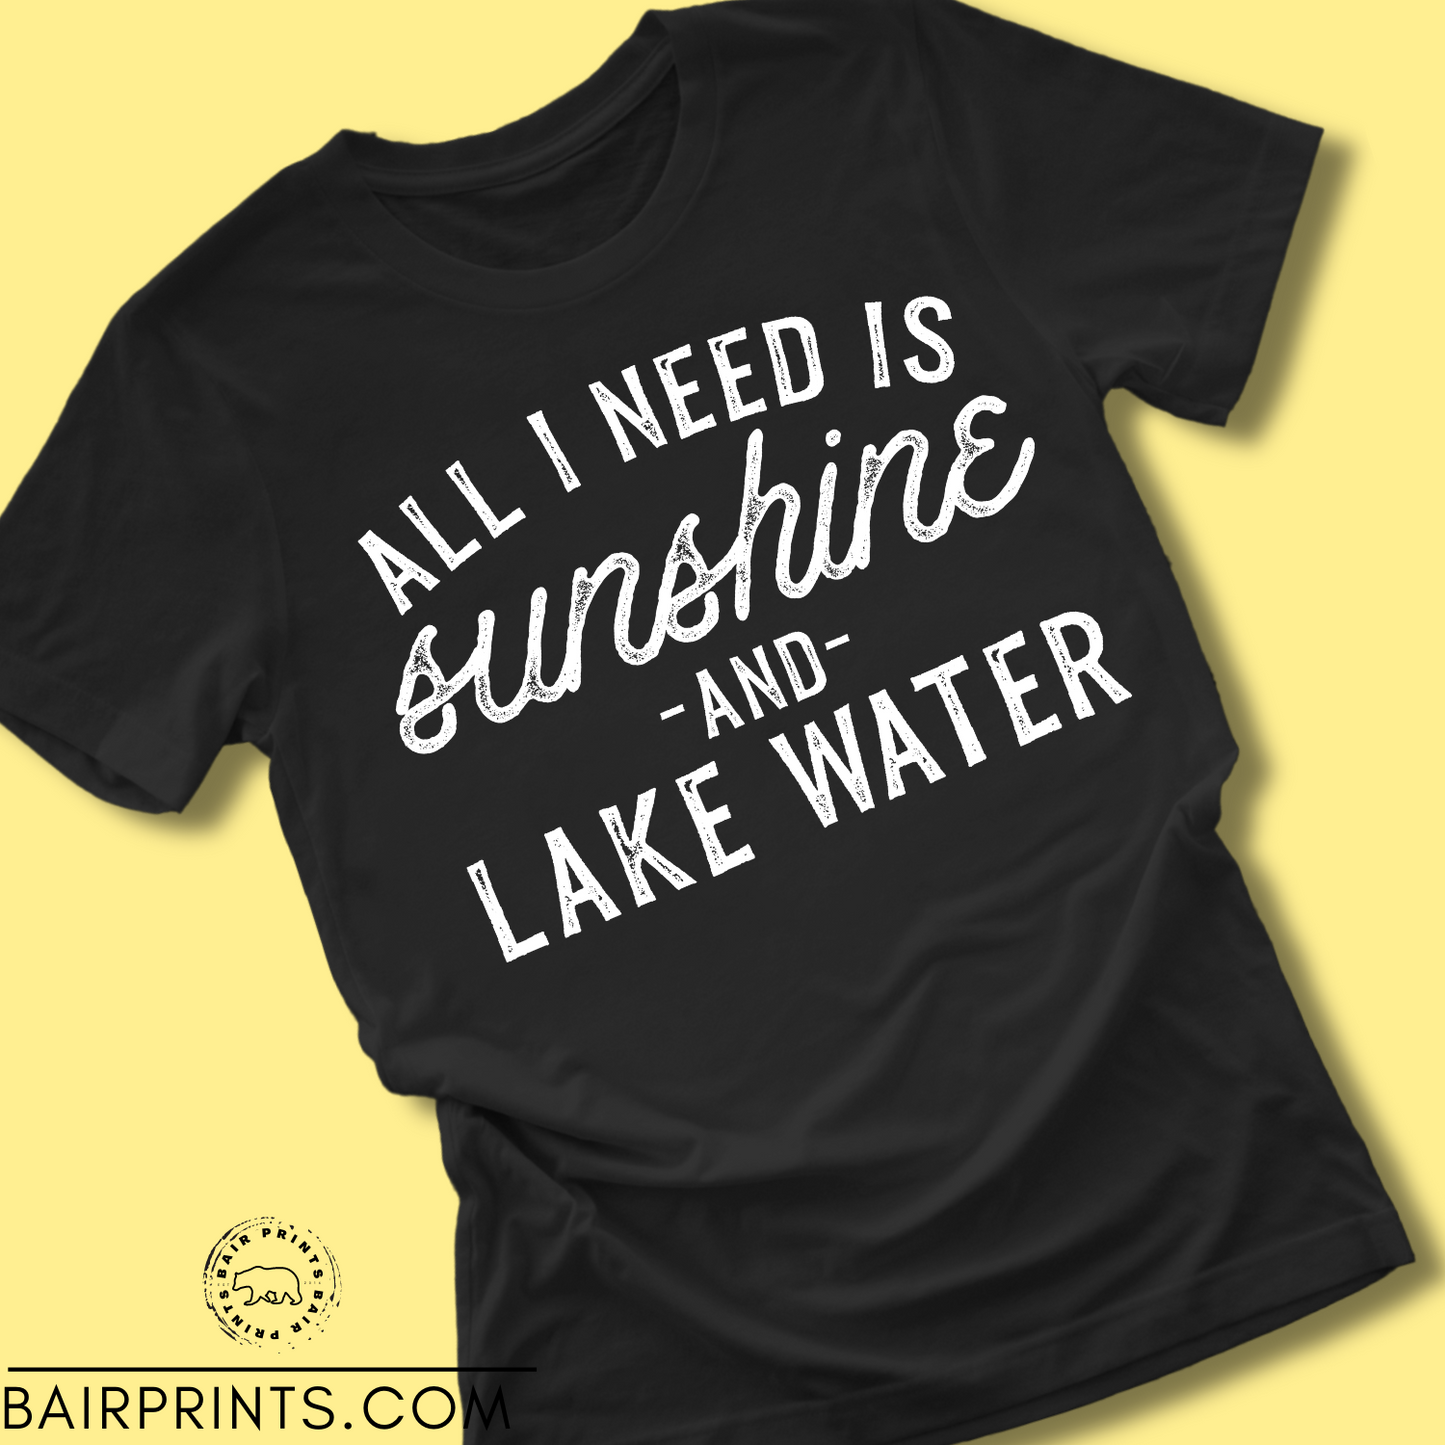 All I Need is Sunshine and Lake Water Screen Printed Tee